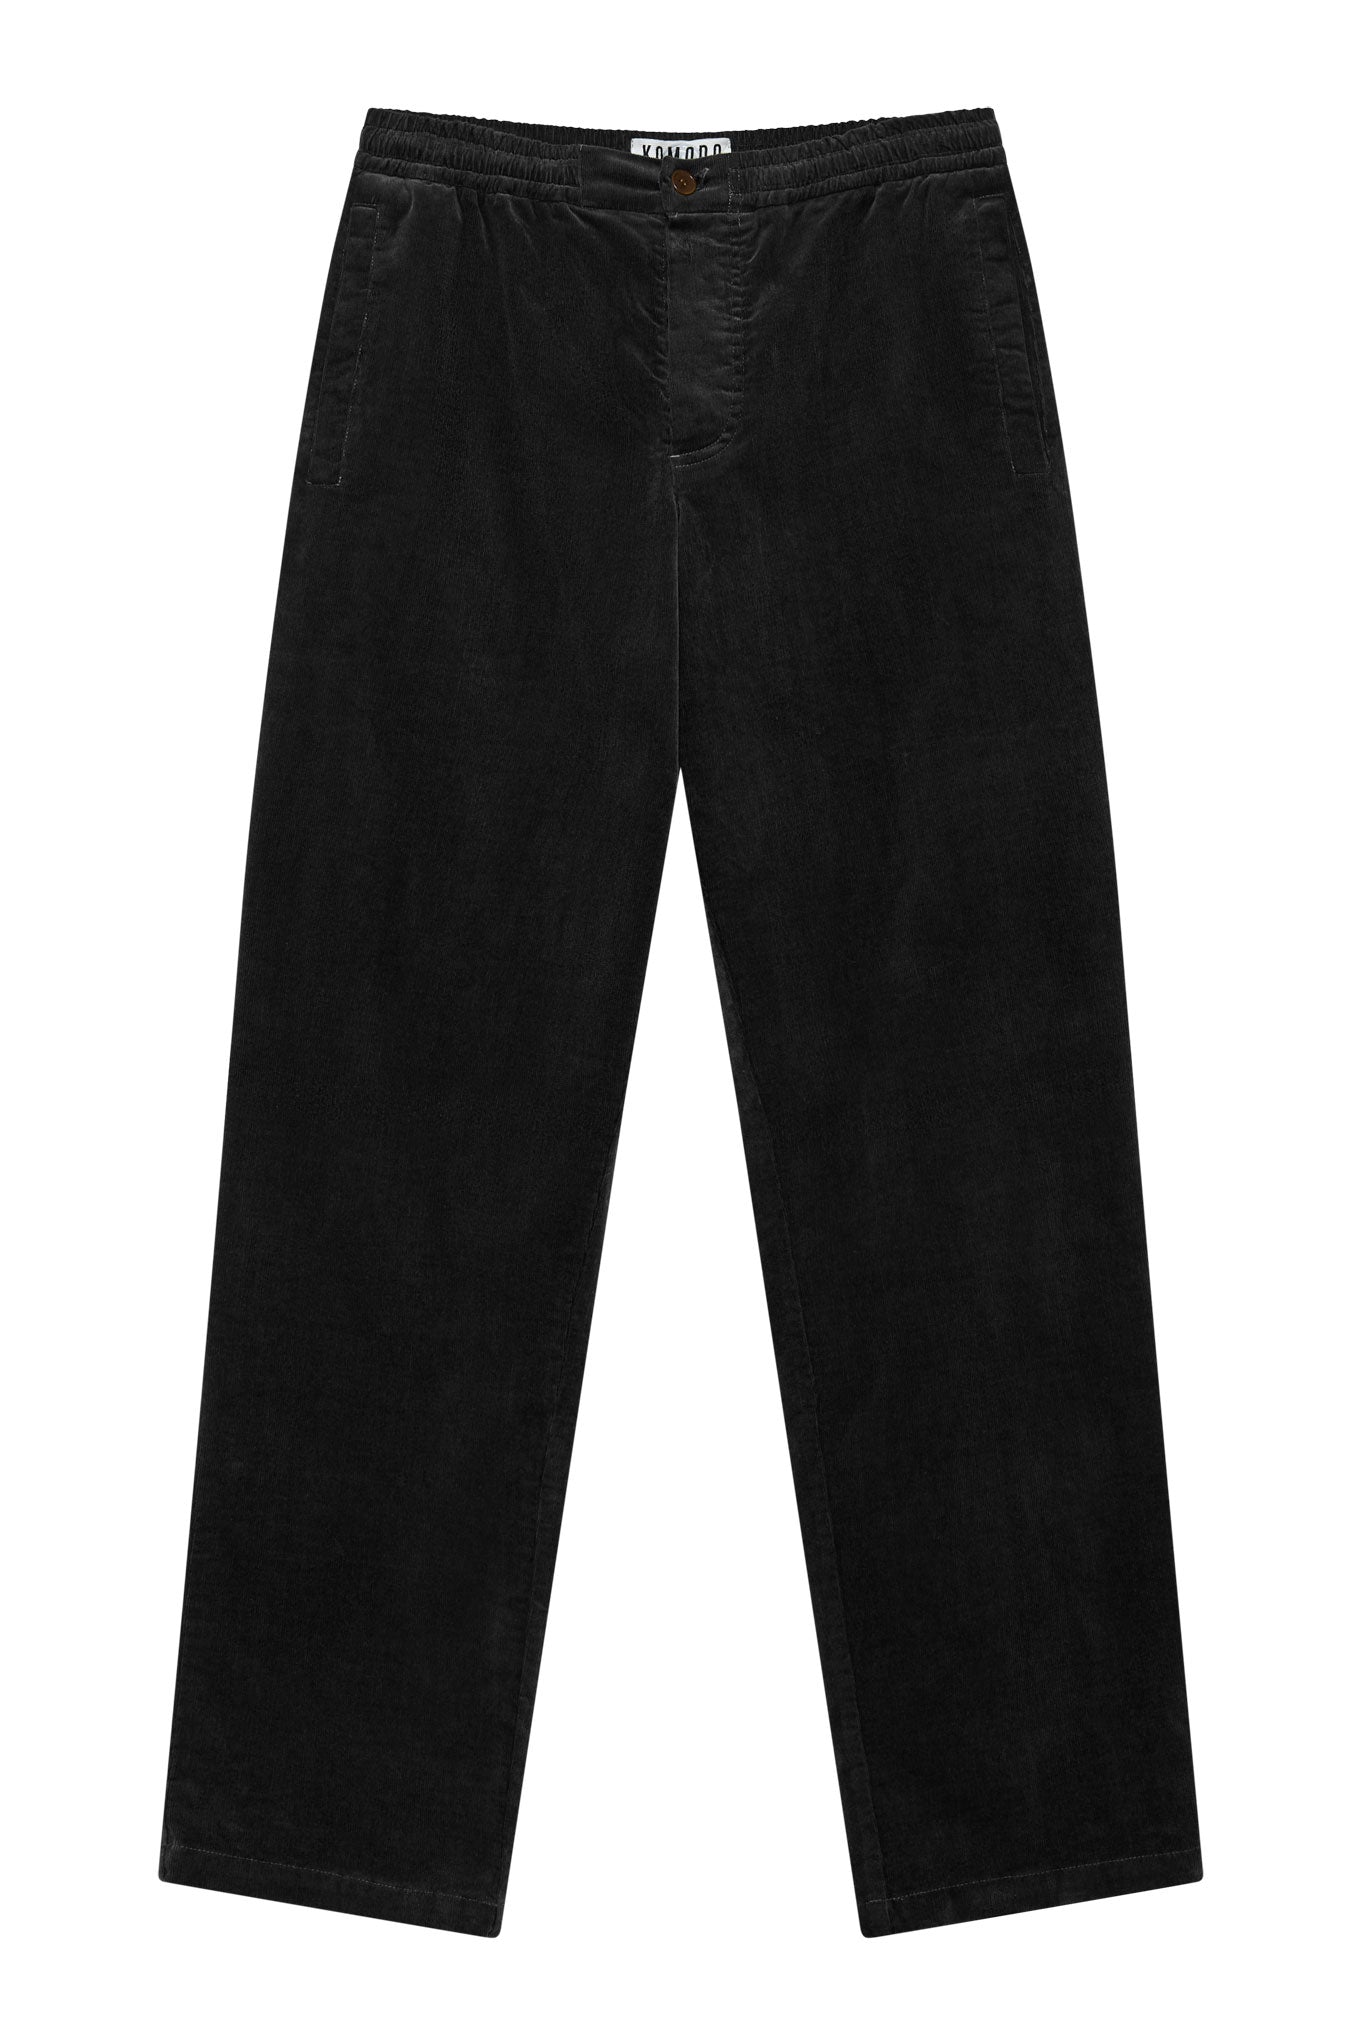 ANDRO - Organic Cotton Cord Trouser Black